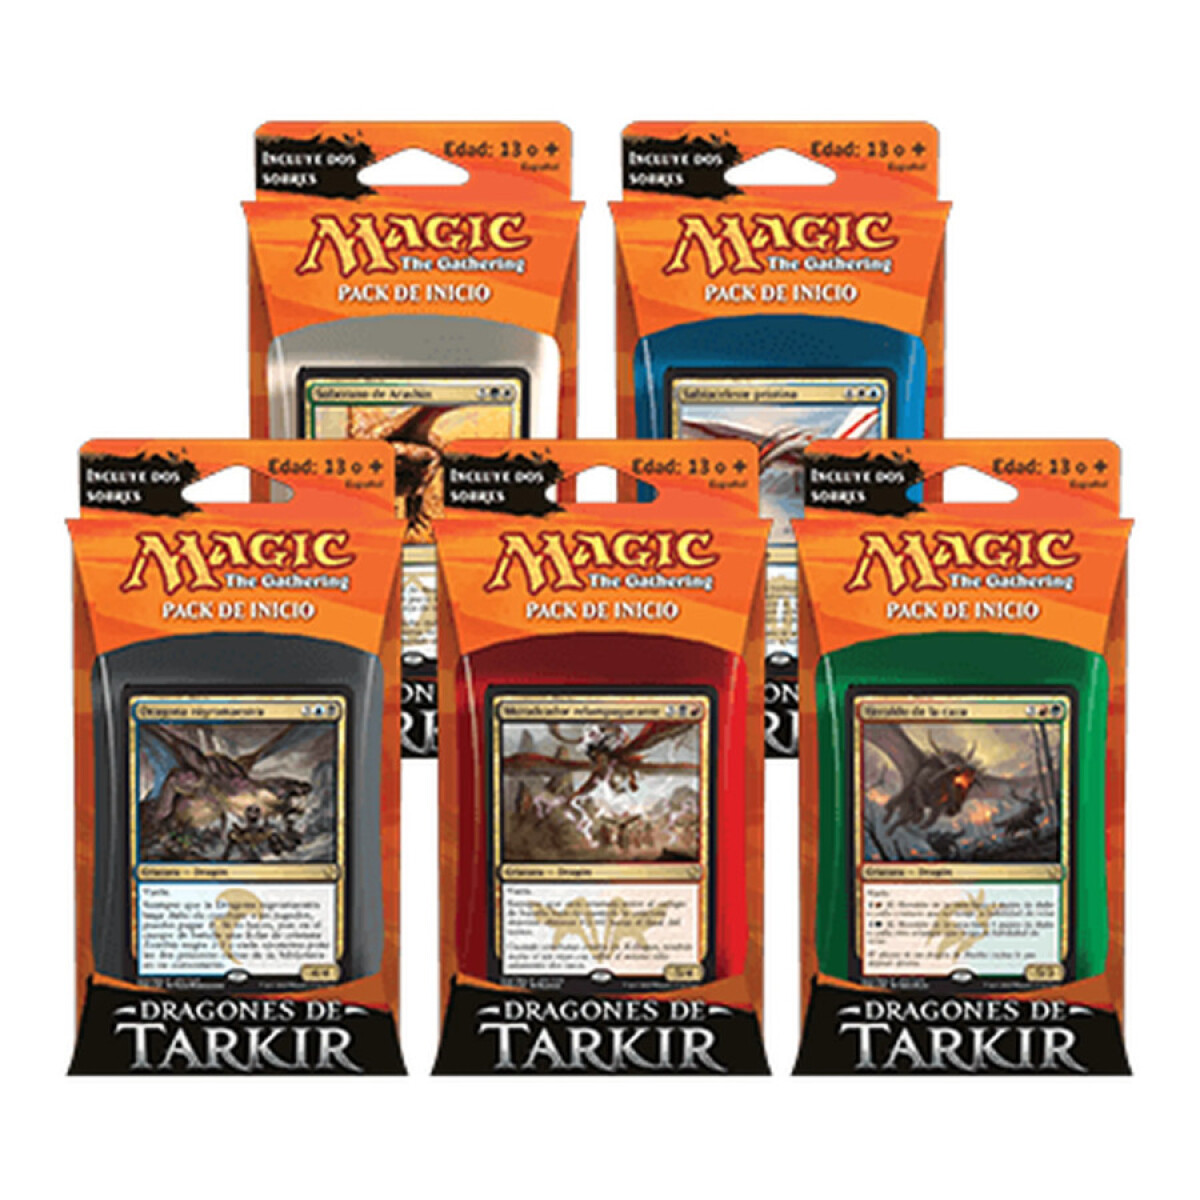 Pack de inicio - Dragons of Trakir [Español] Set al azar 